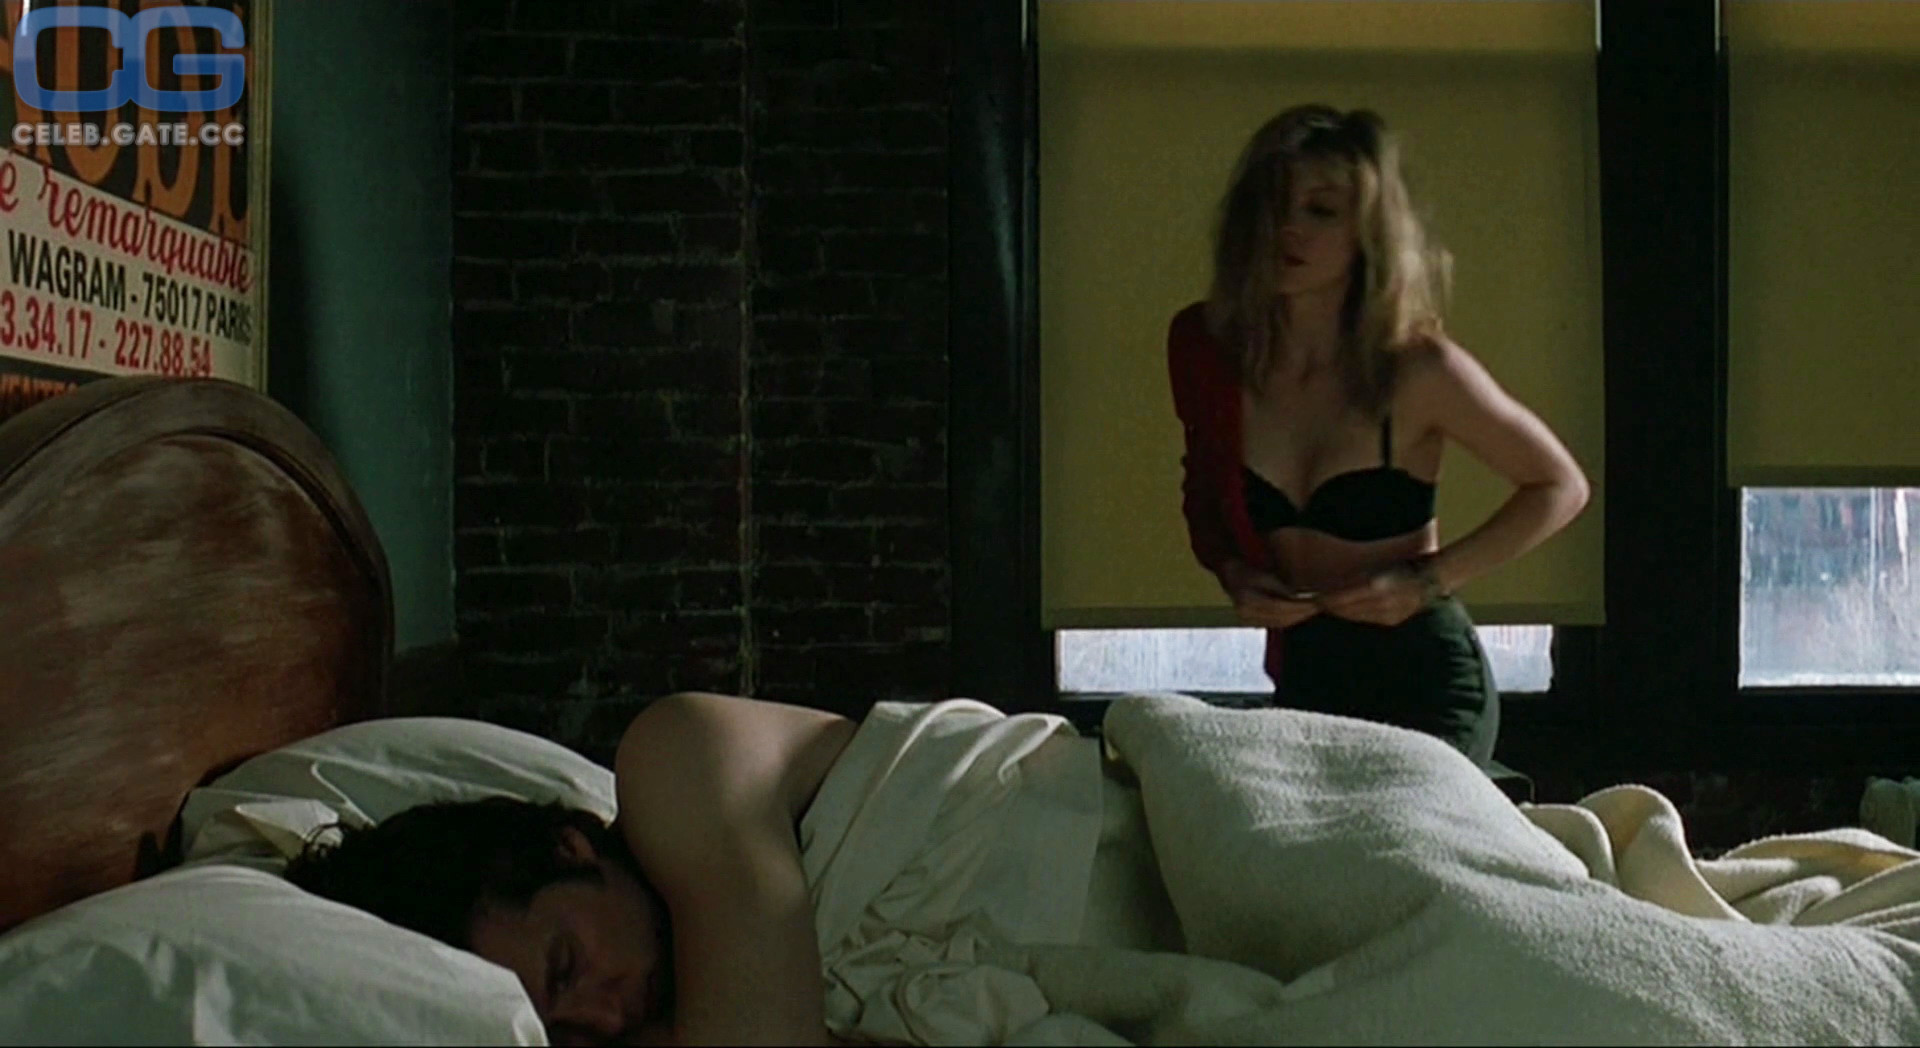 Michelle Pfeiffer hot scene